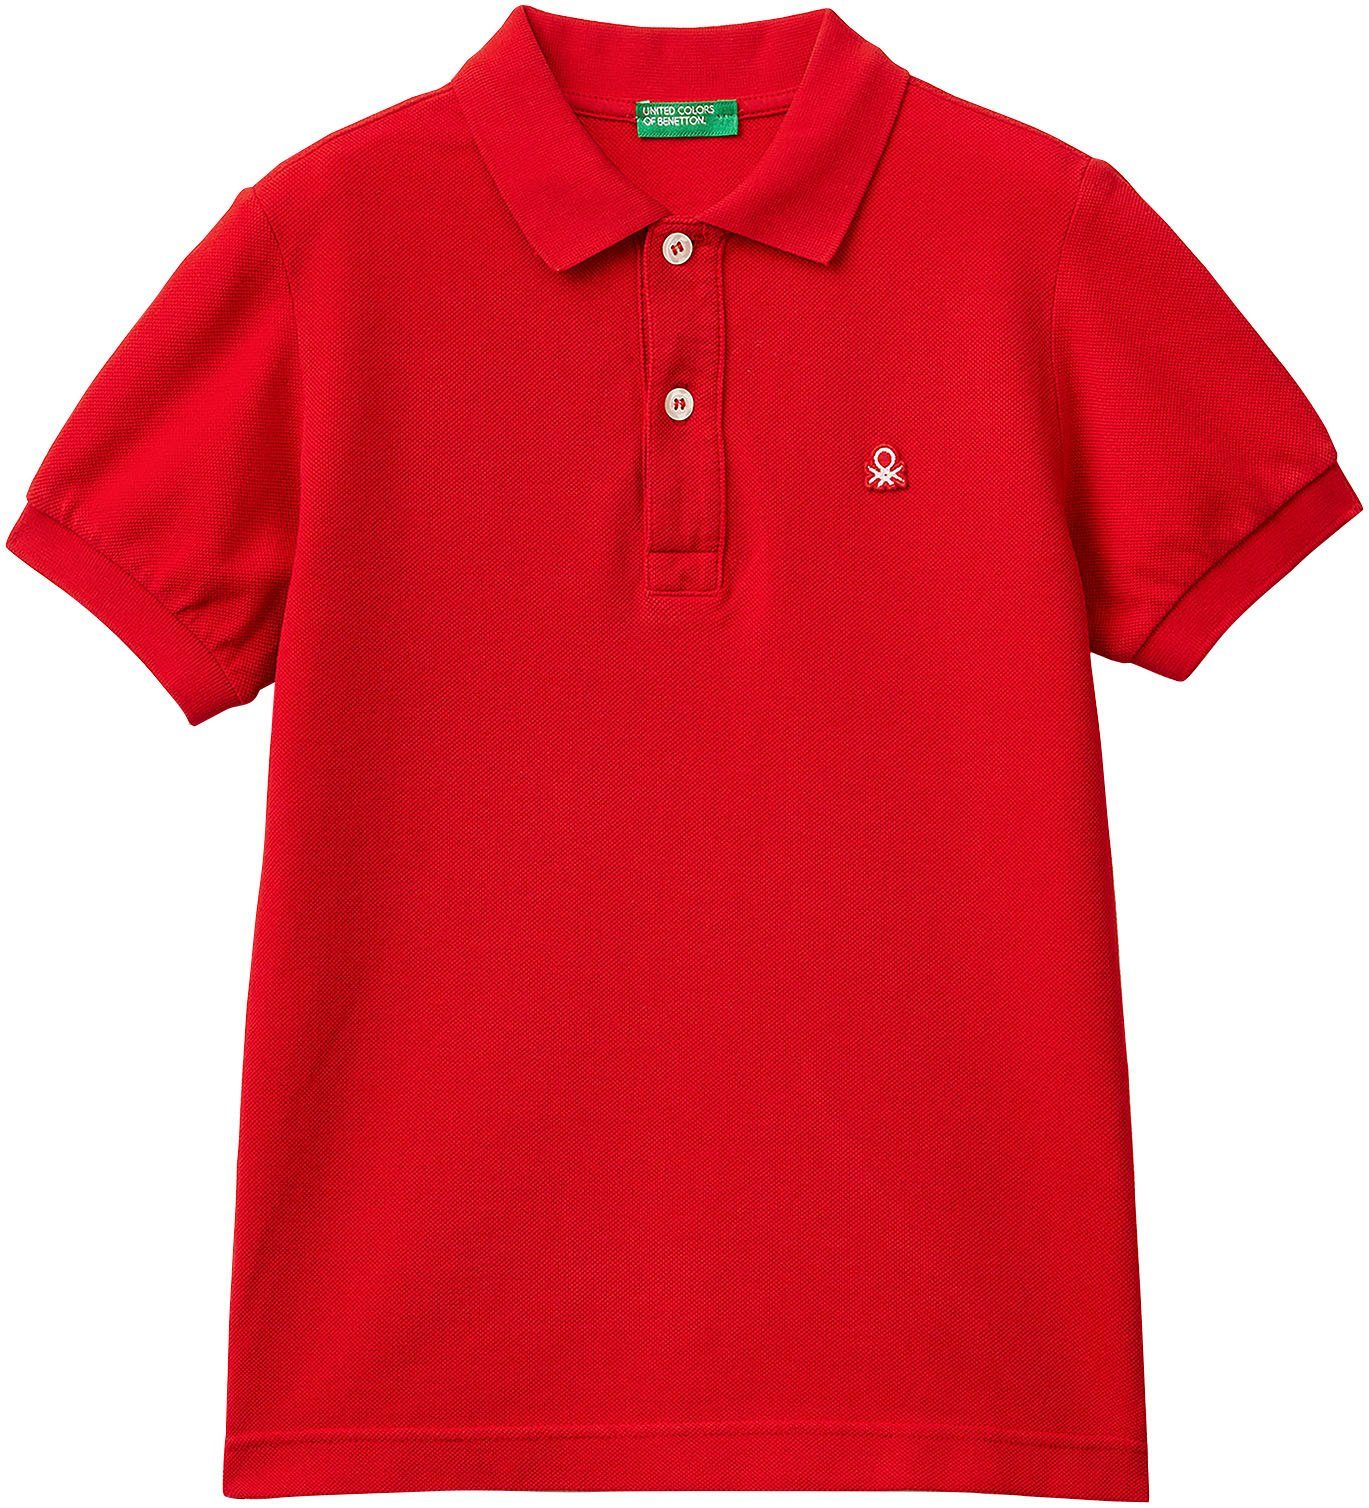 Poloshirt Markenlabel mit United Benetton Colors of